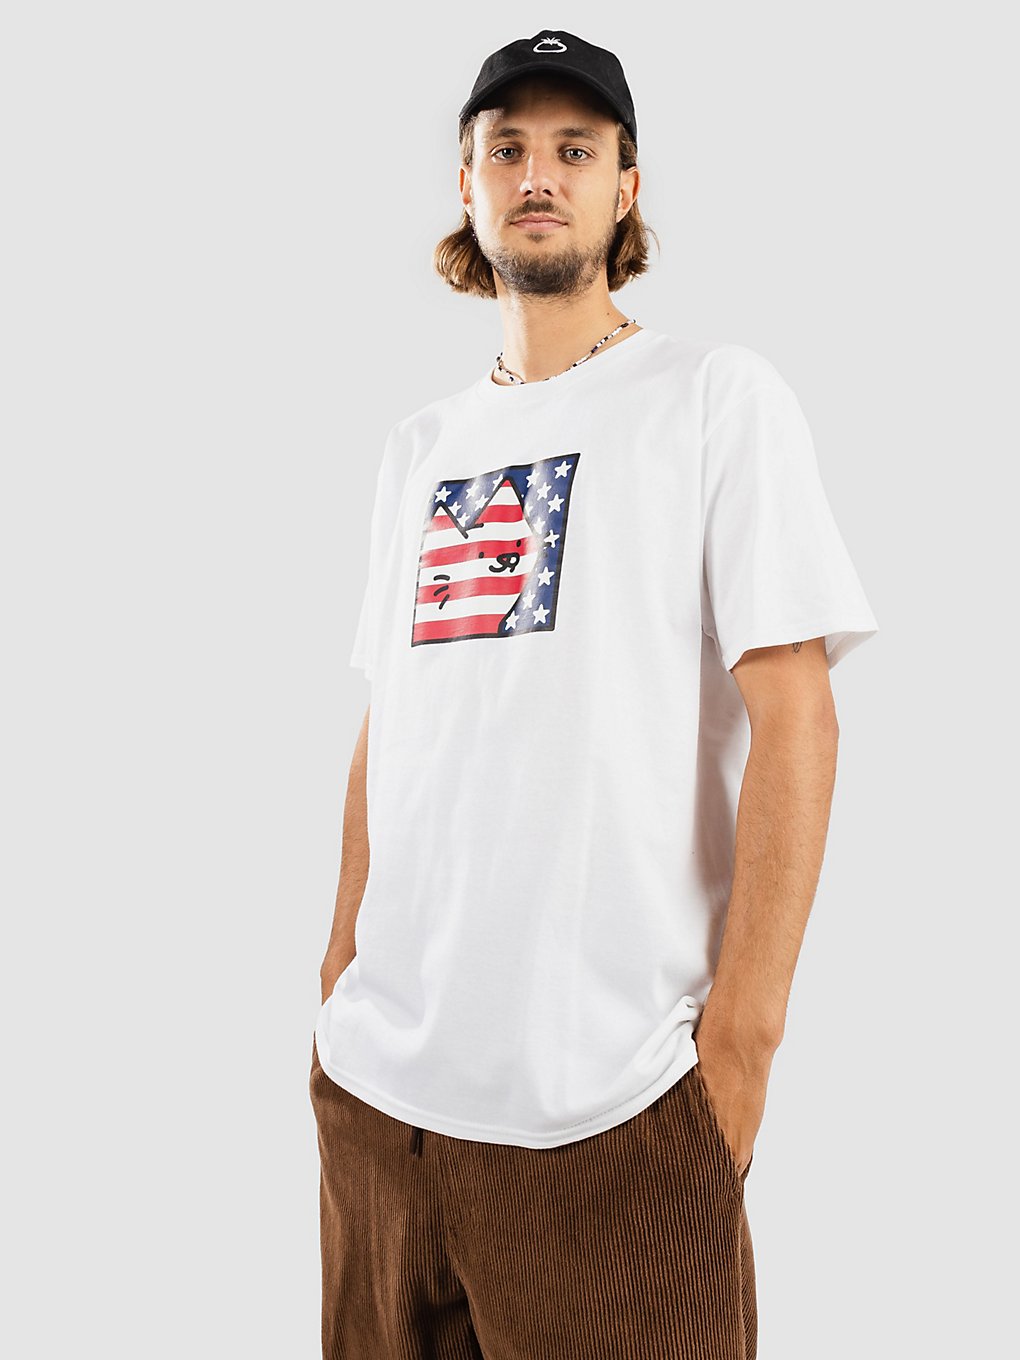 Leon Karssen Americat T-Shirt white kaufen